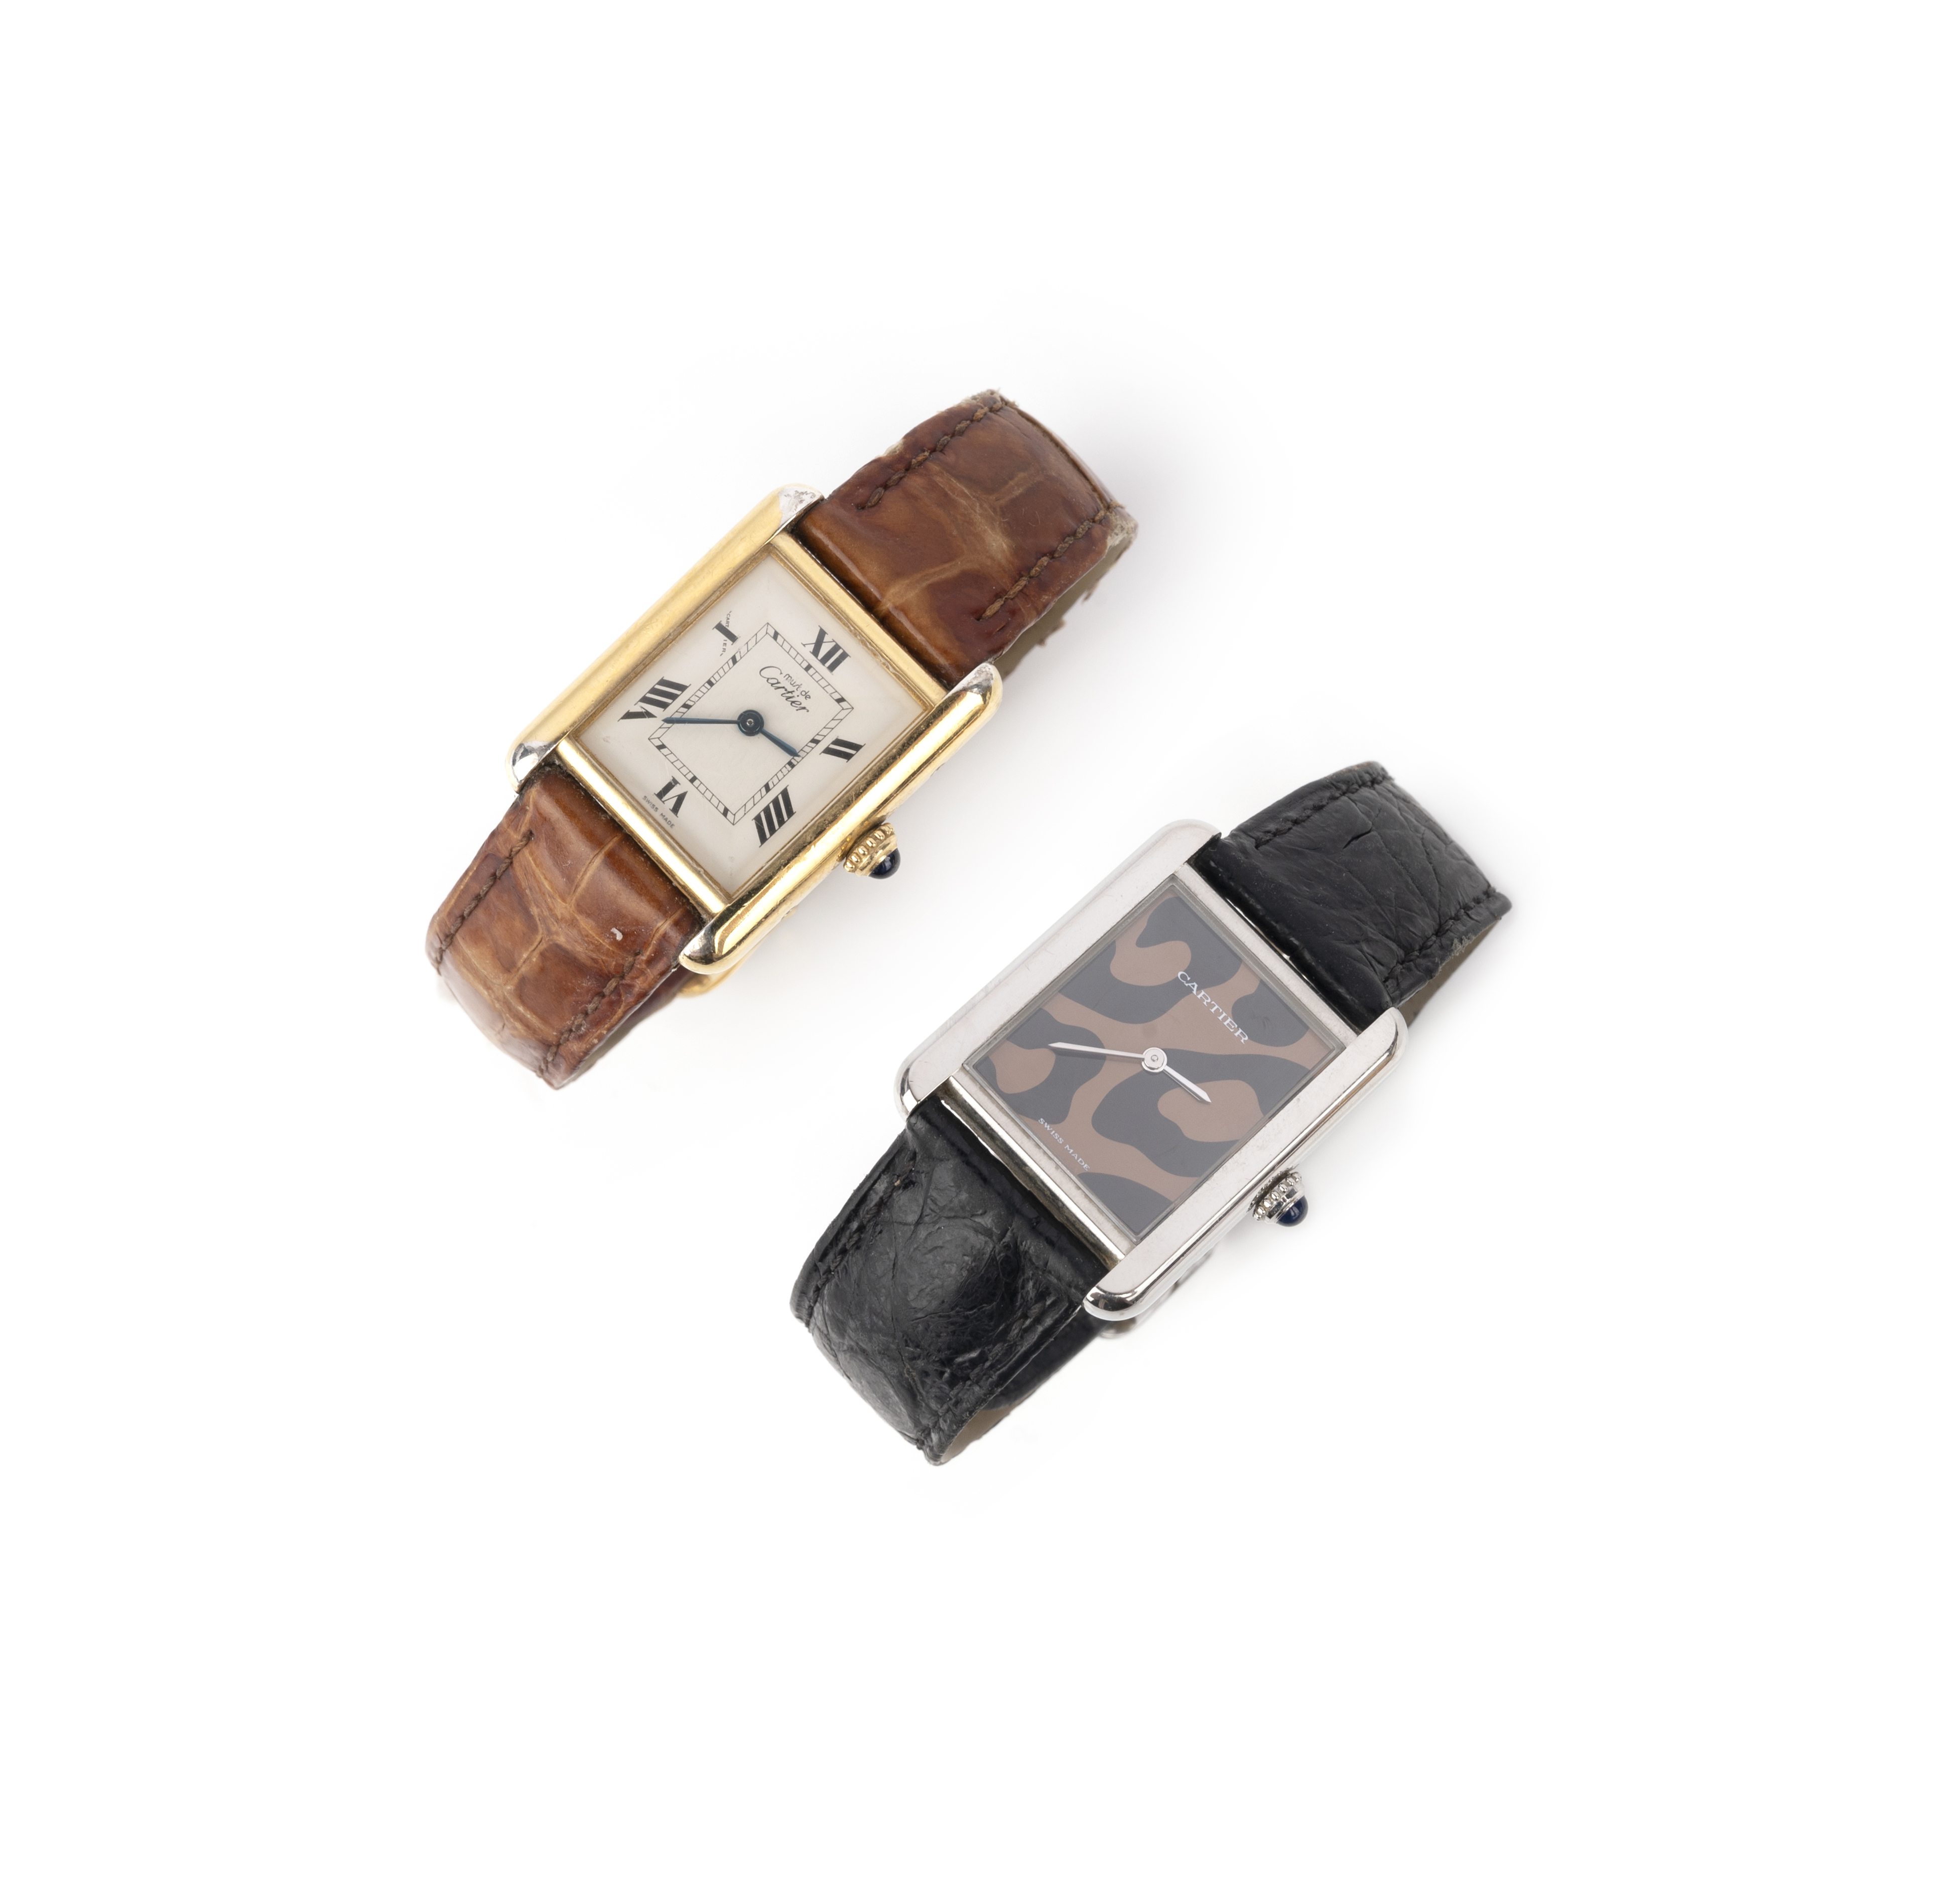 Cartier, two wristwatches, 'Must de Cartier', ref 2415, and 'Tank Solo', ref.3170, the 'Must de